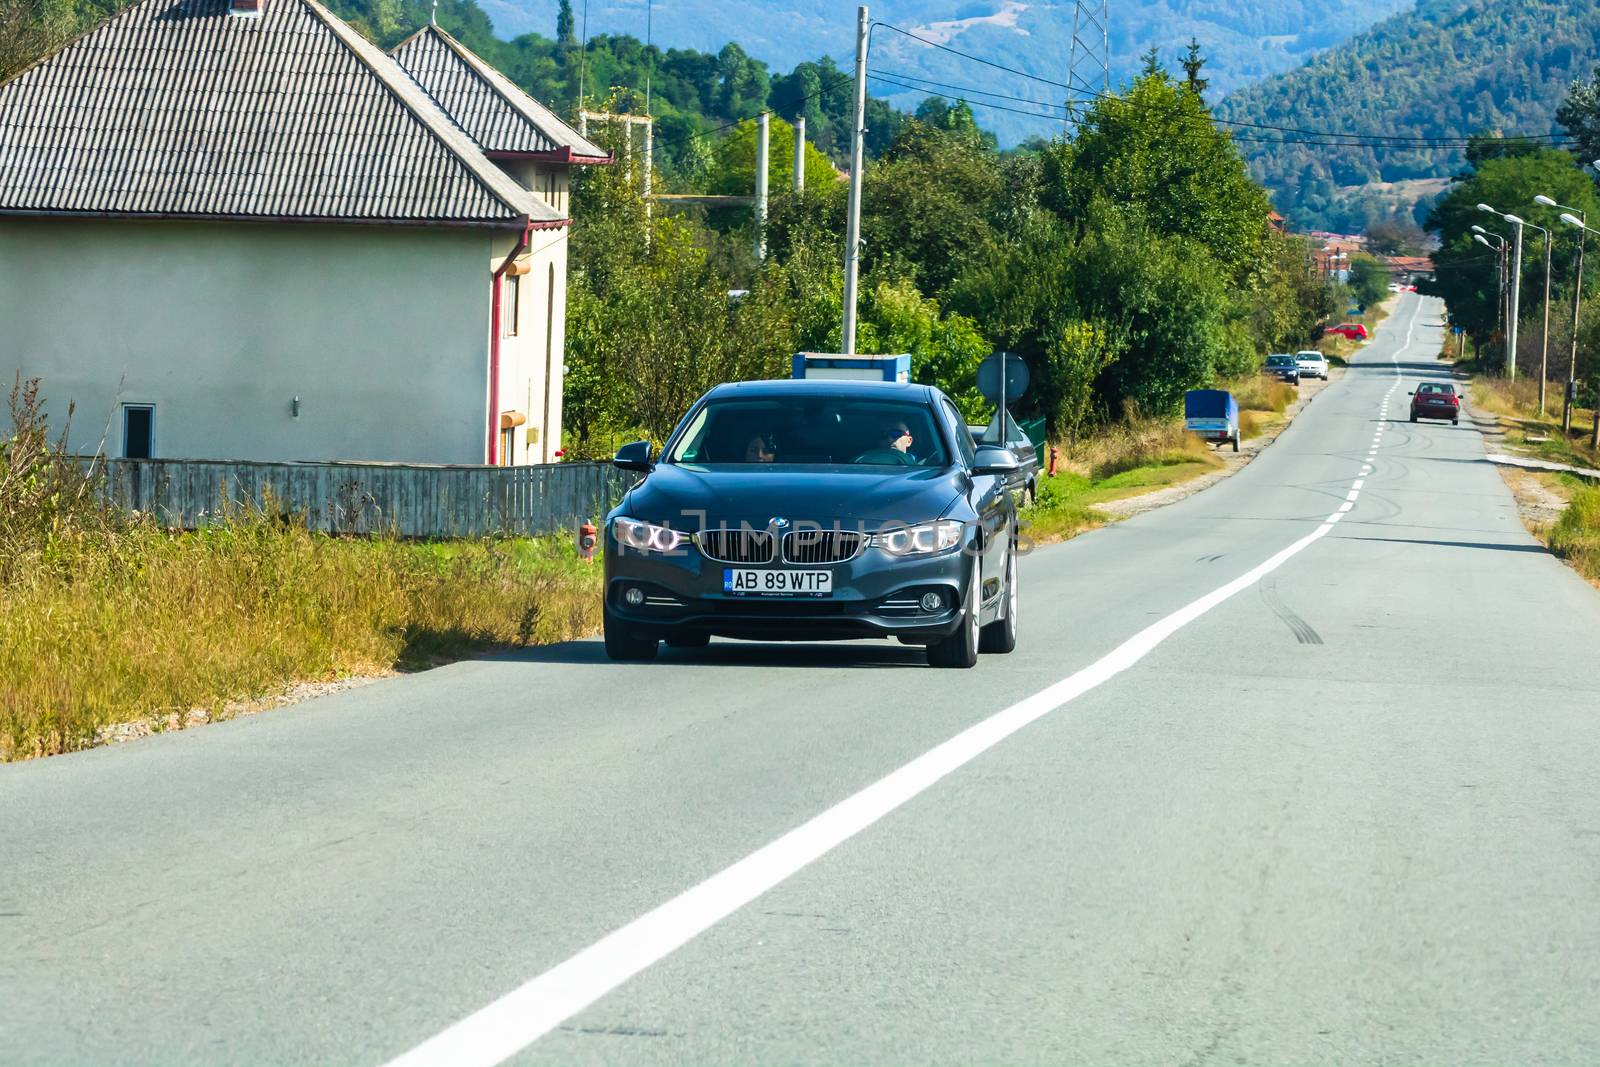 Traveling BMW car in motion on asphalt road, front view of car o by vladispas